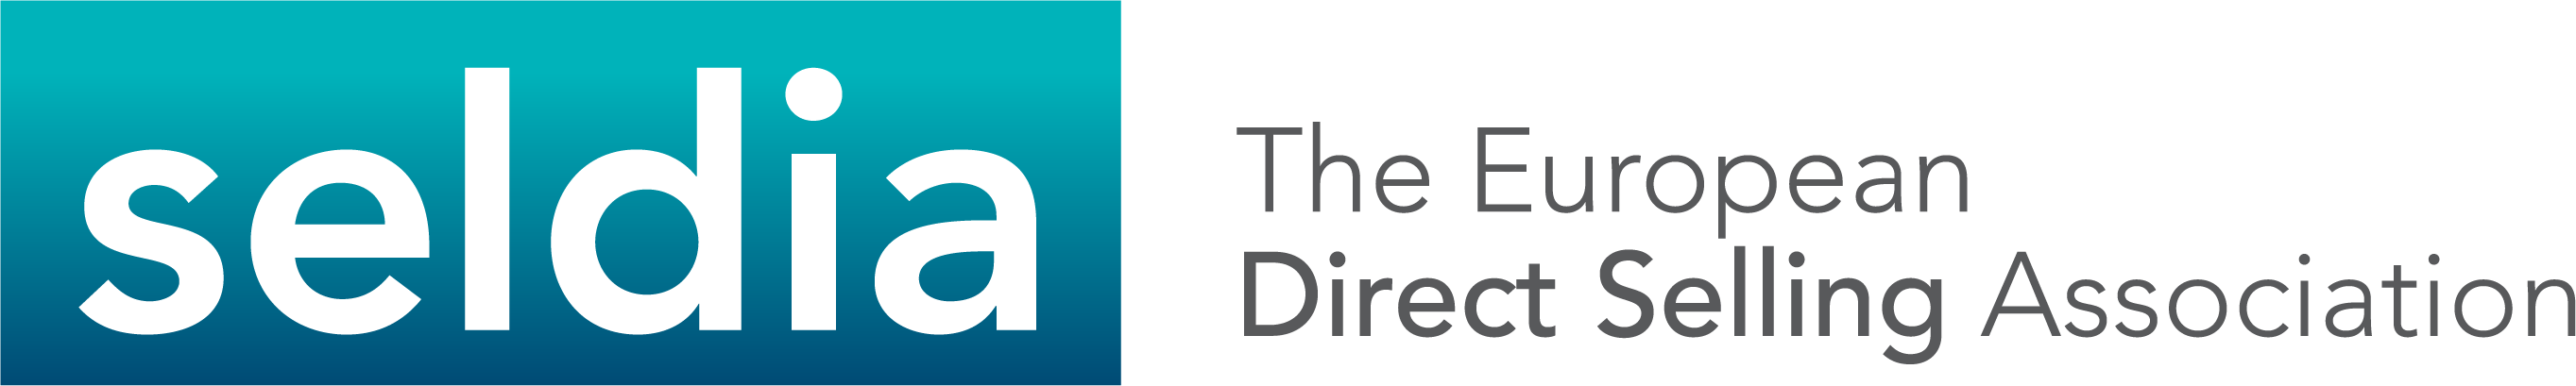 Seldia - The European Direct Selling Association logo